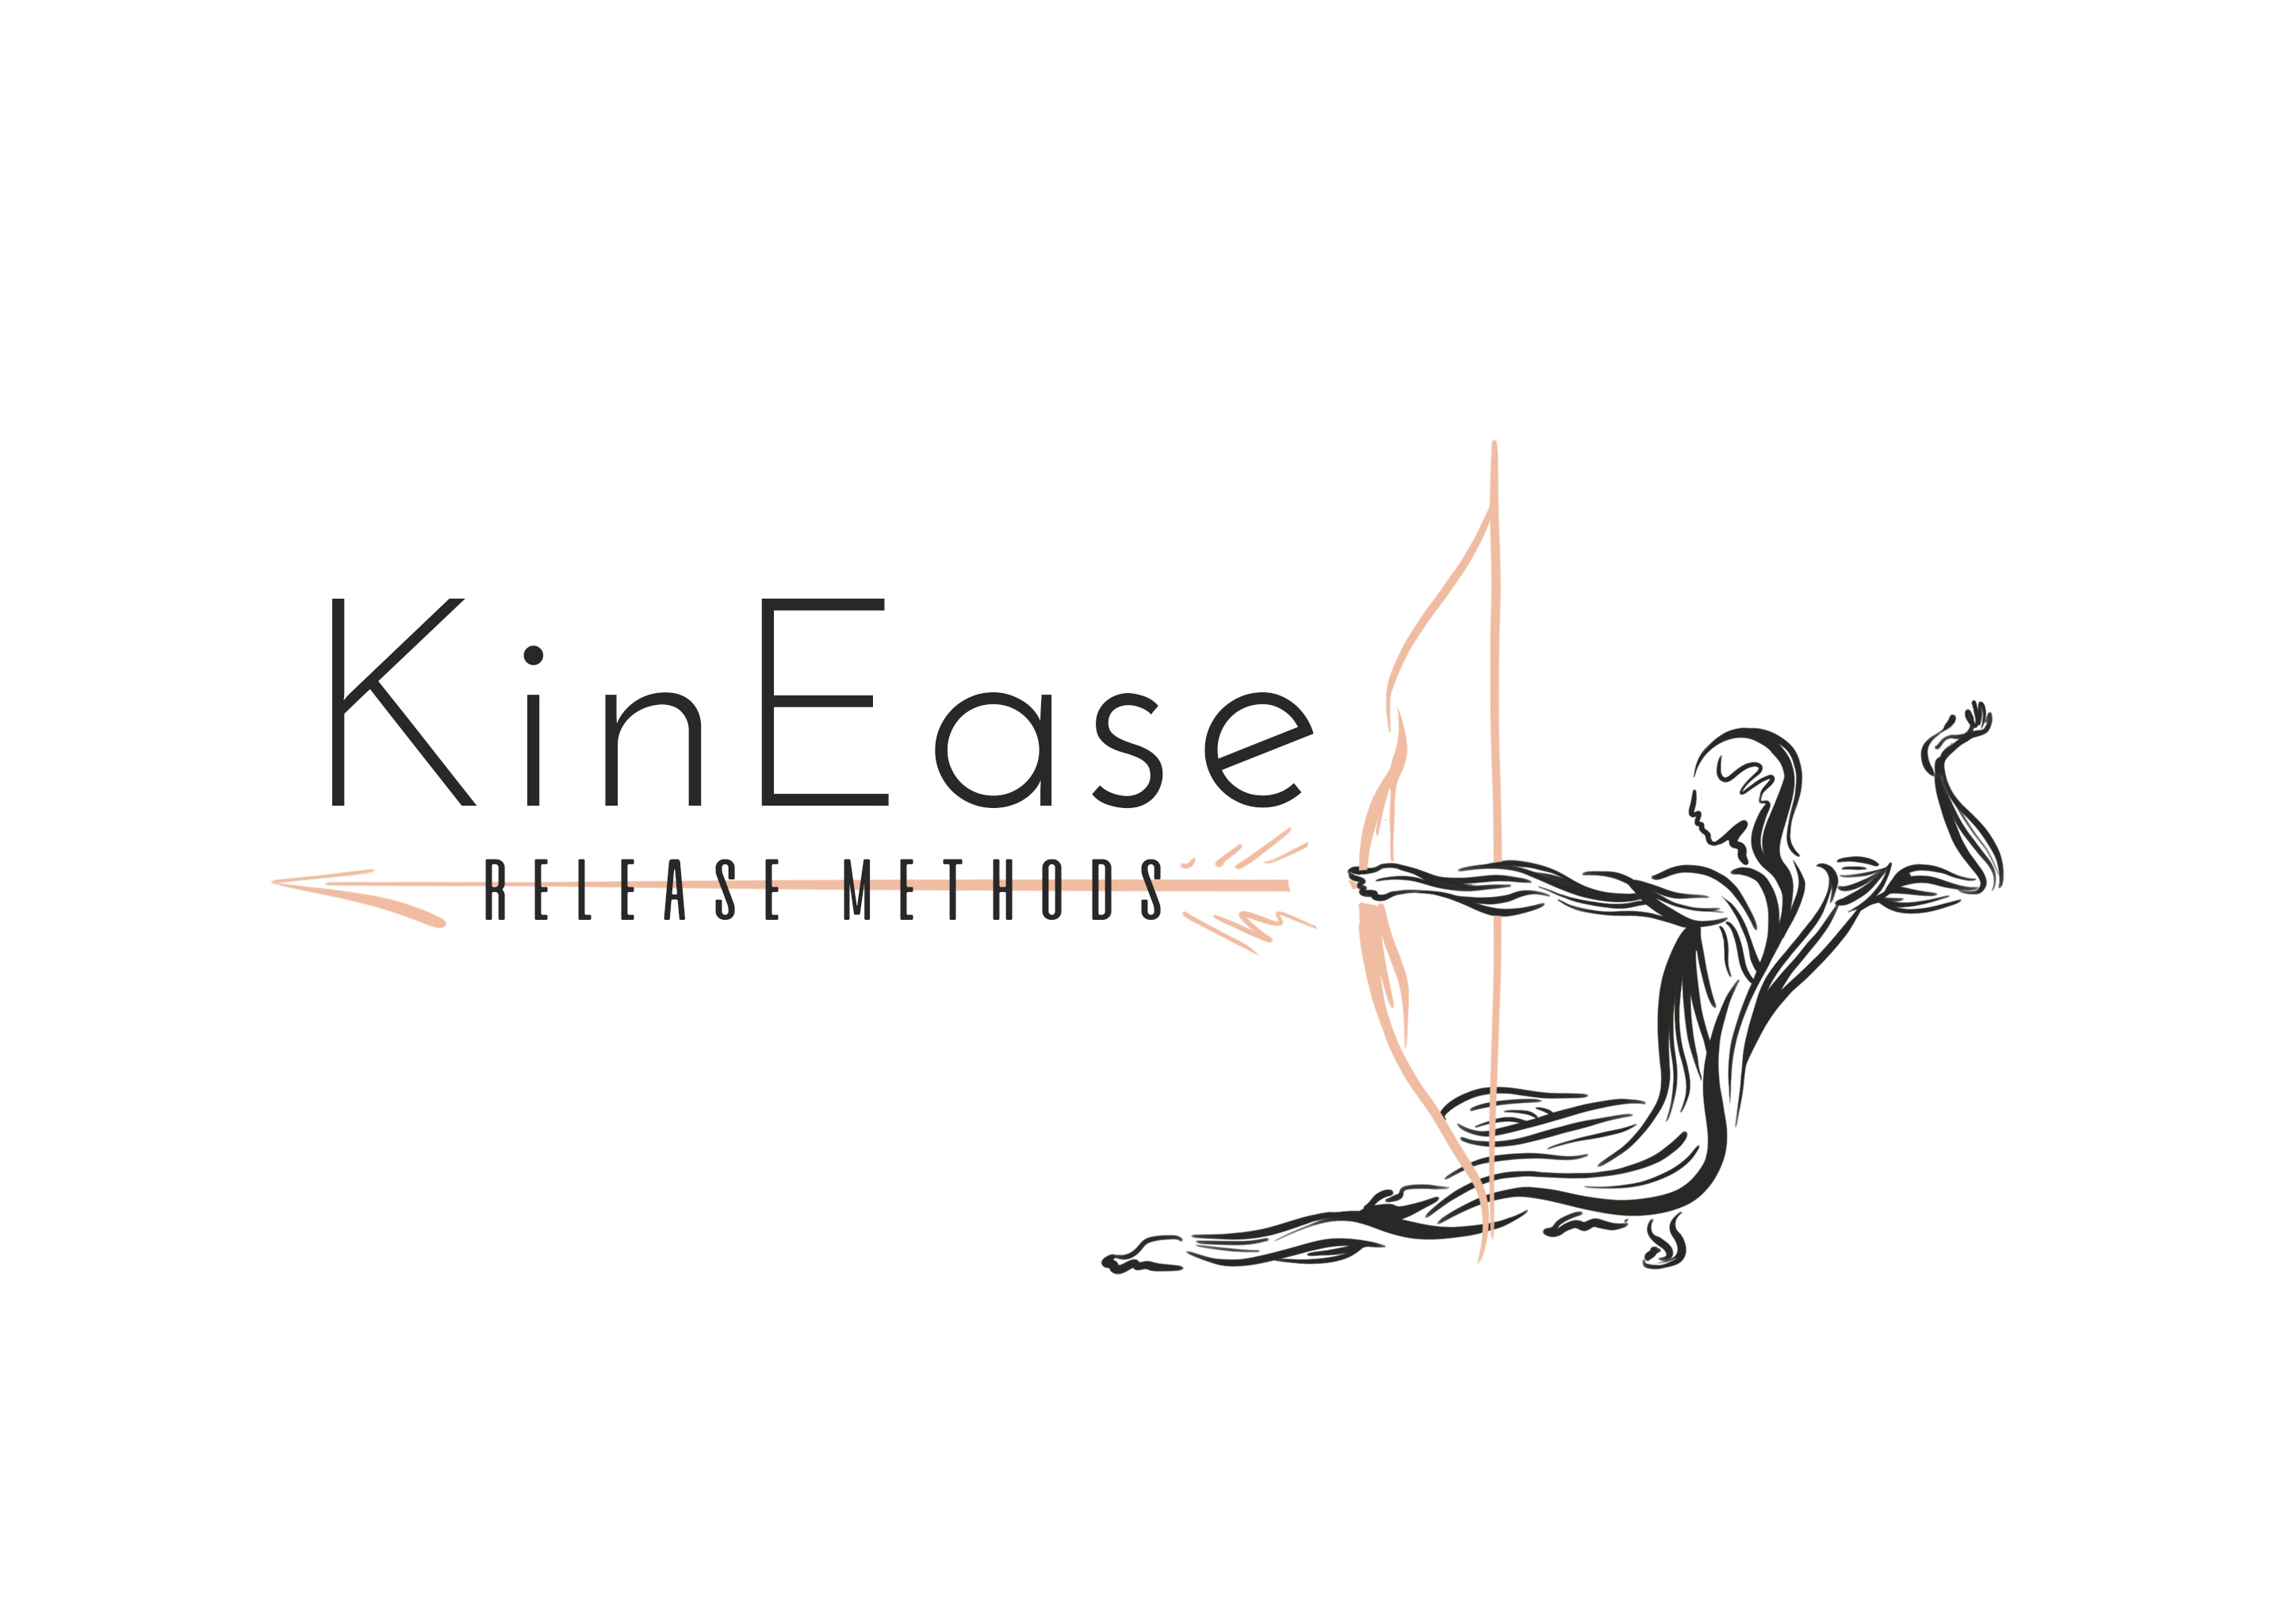 KinEase Release Methods